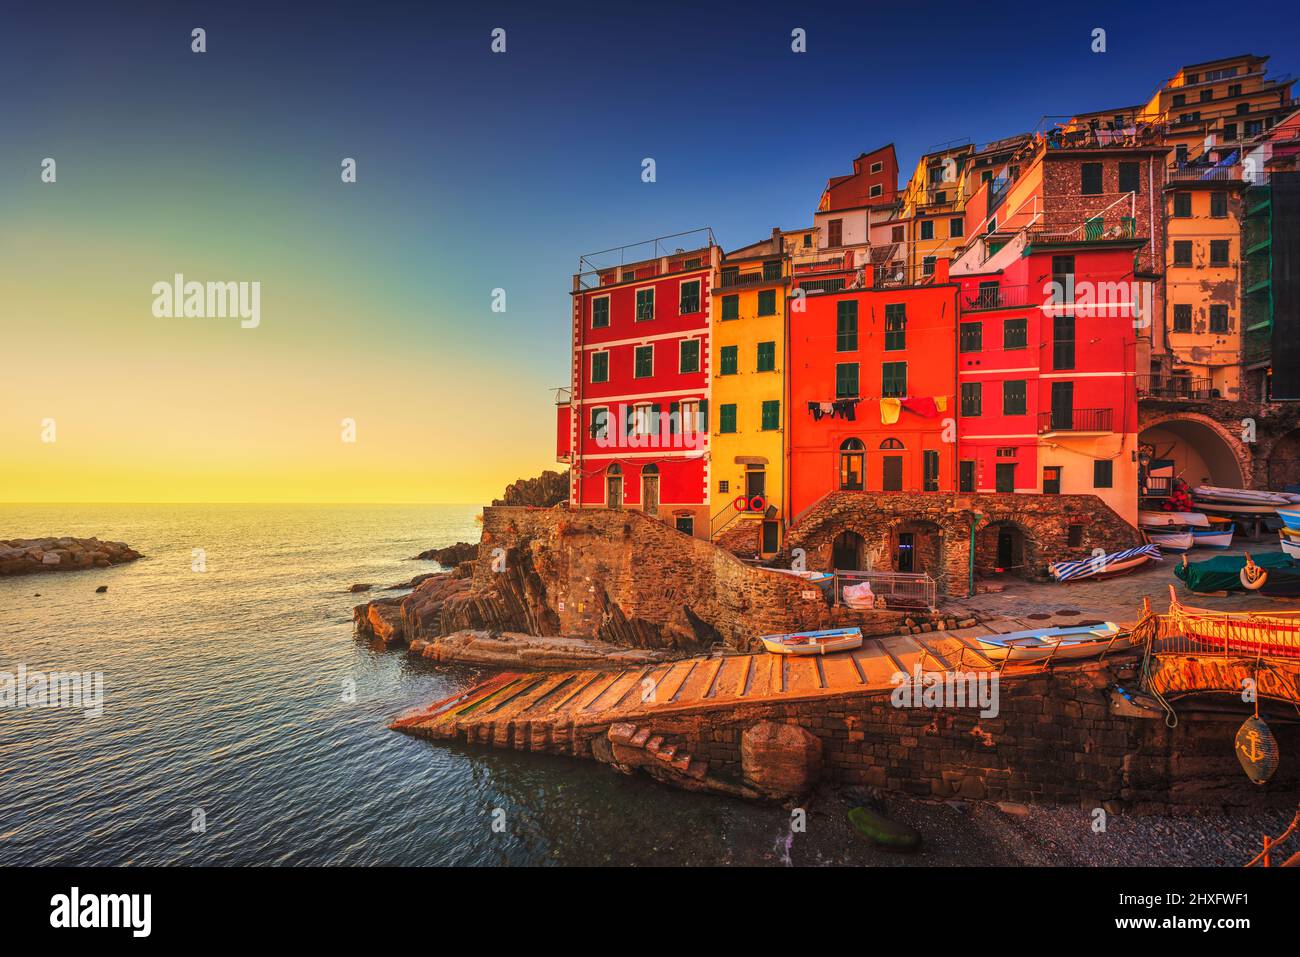 Riomaggiore Stadt, Kap und Meer bei Sonnenuntergang. Seascape im Nationalpark Cinque Terre, Ligurien, Italien, Europa. Langzeitaufnahmen Stockfoto